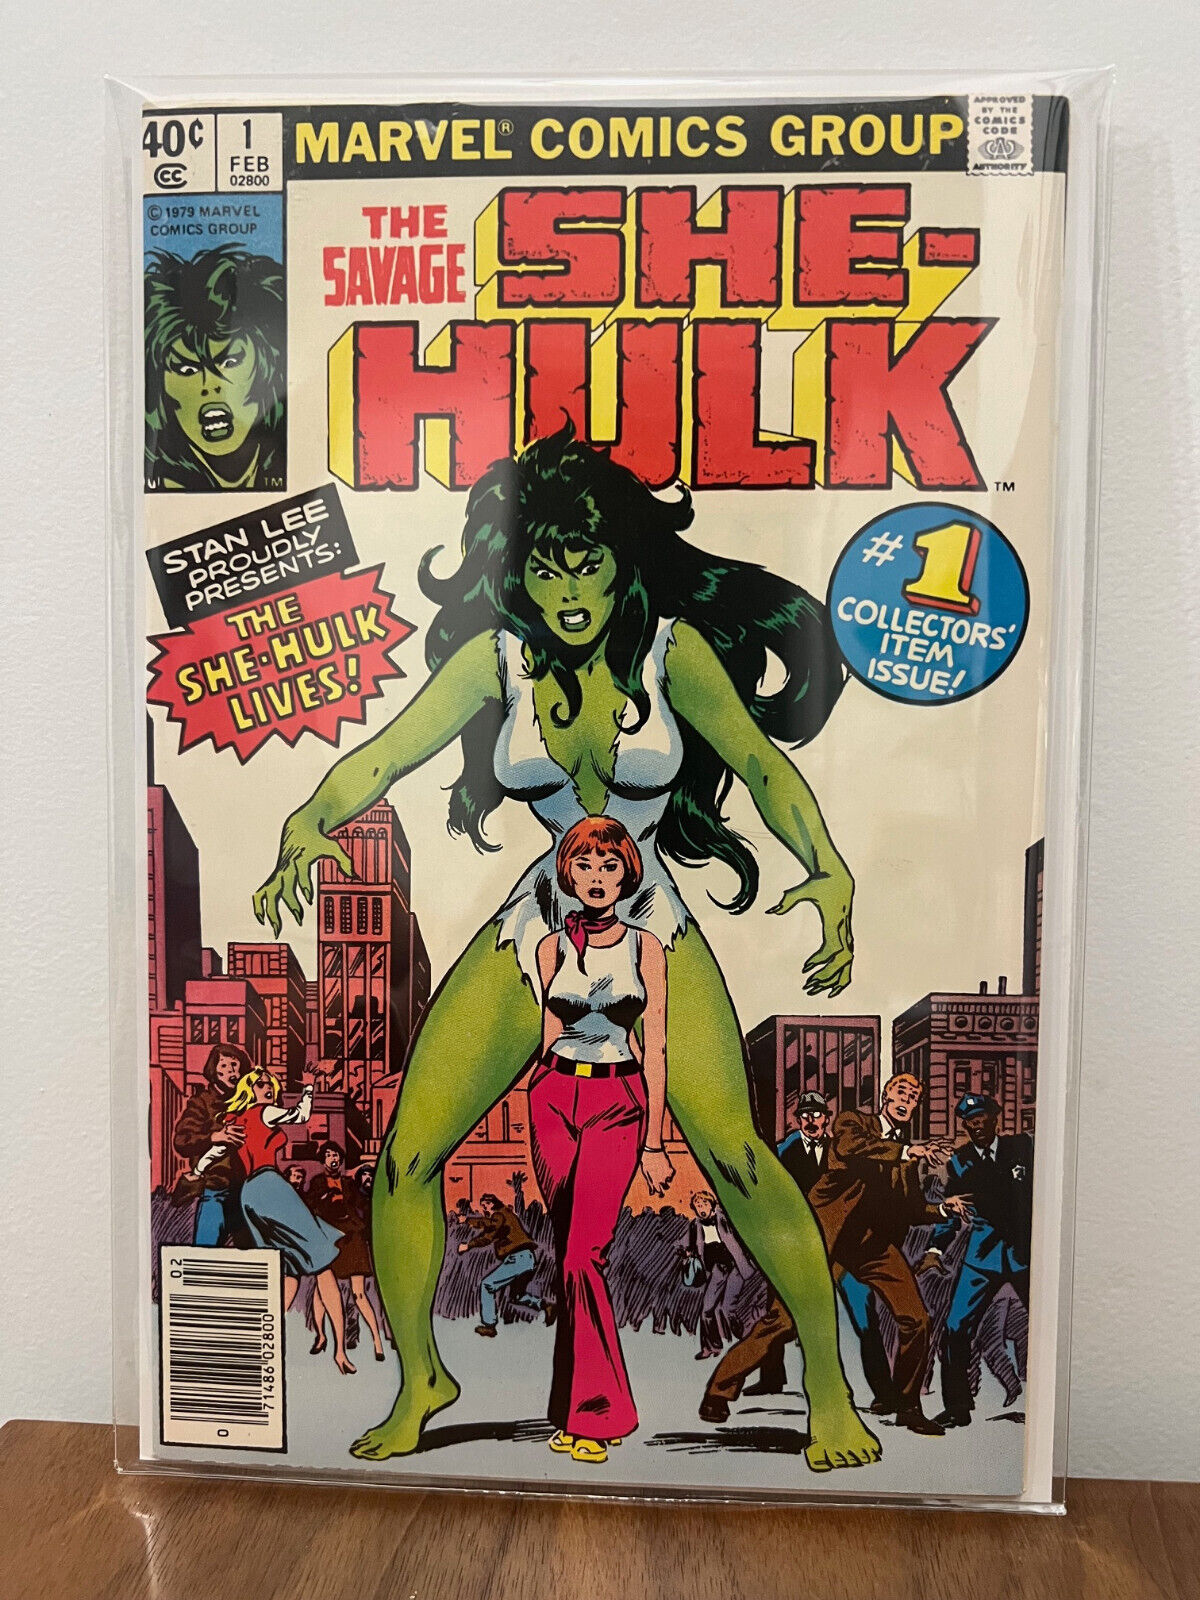 She hulk #1 1980 - 1st Appearance of She Hulk Newsstand